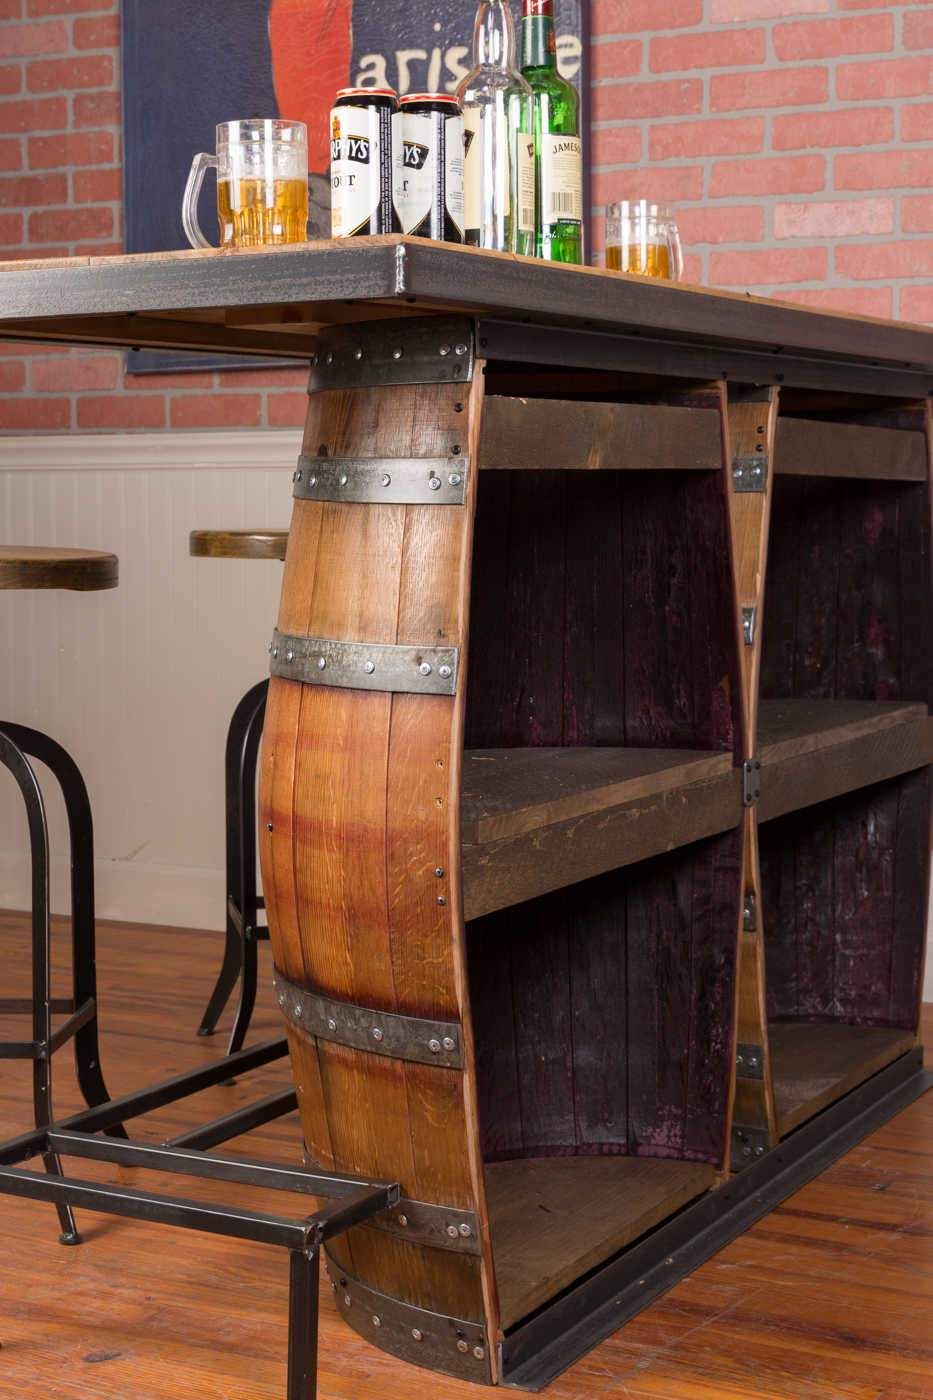 Why You Should Buy Wine Barrel Furniture?